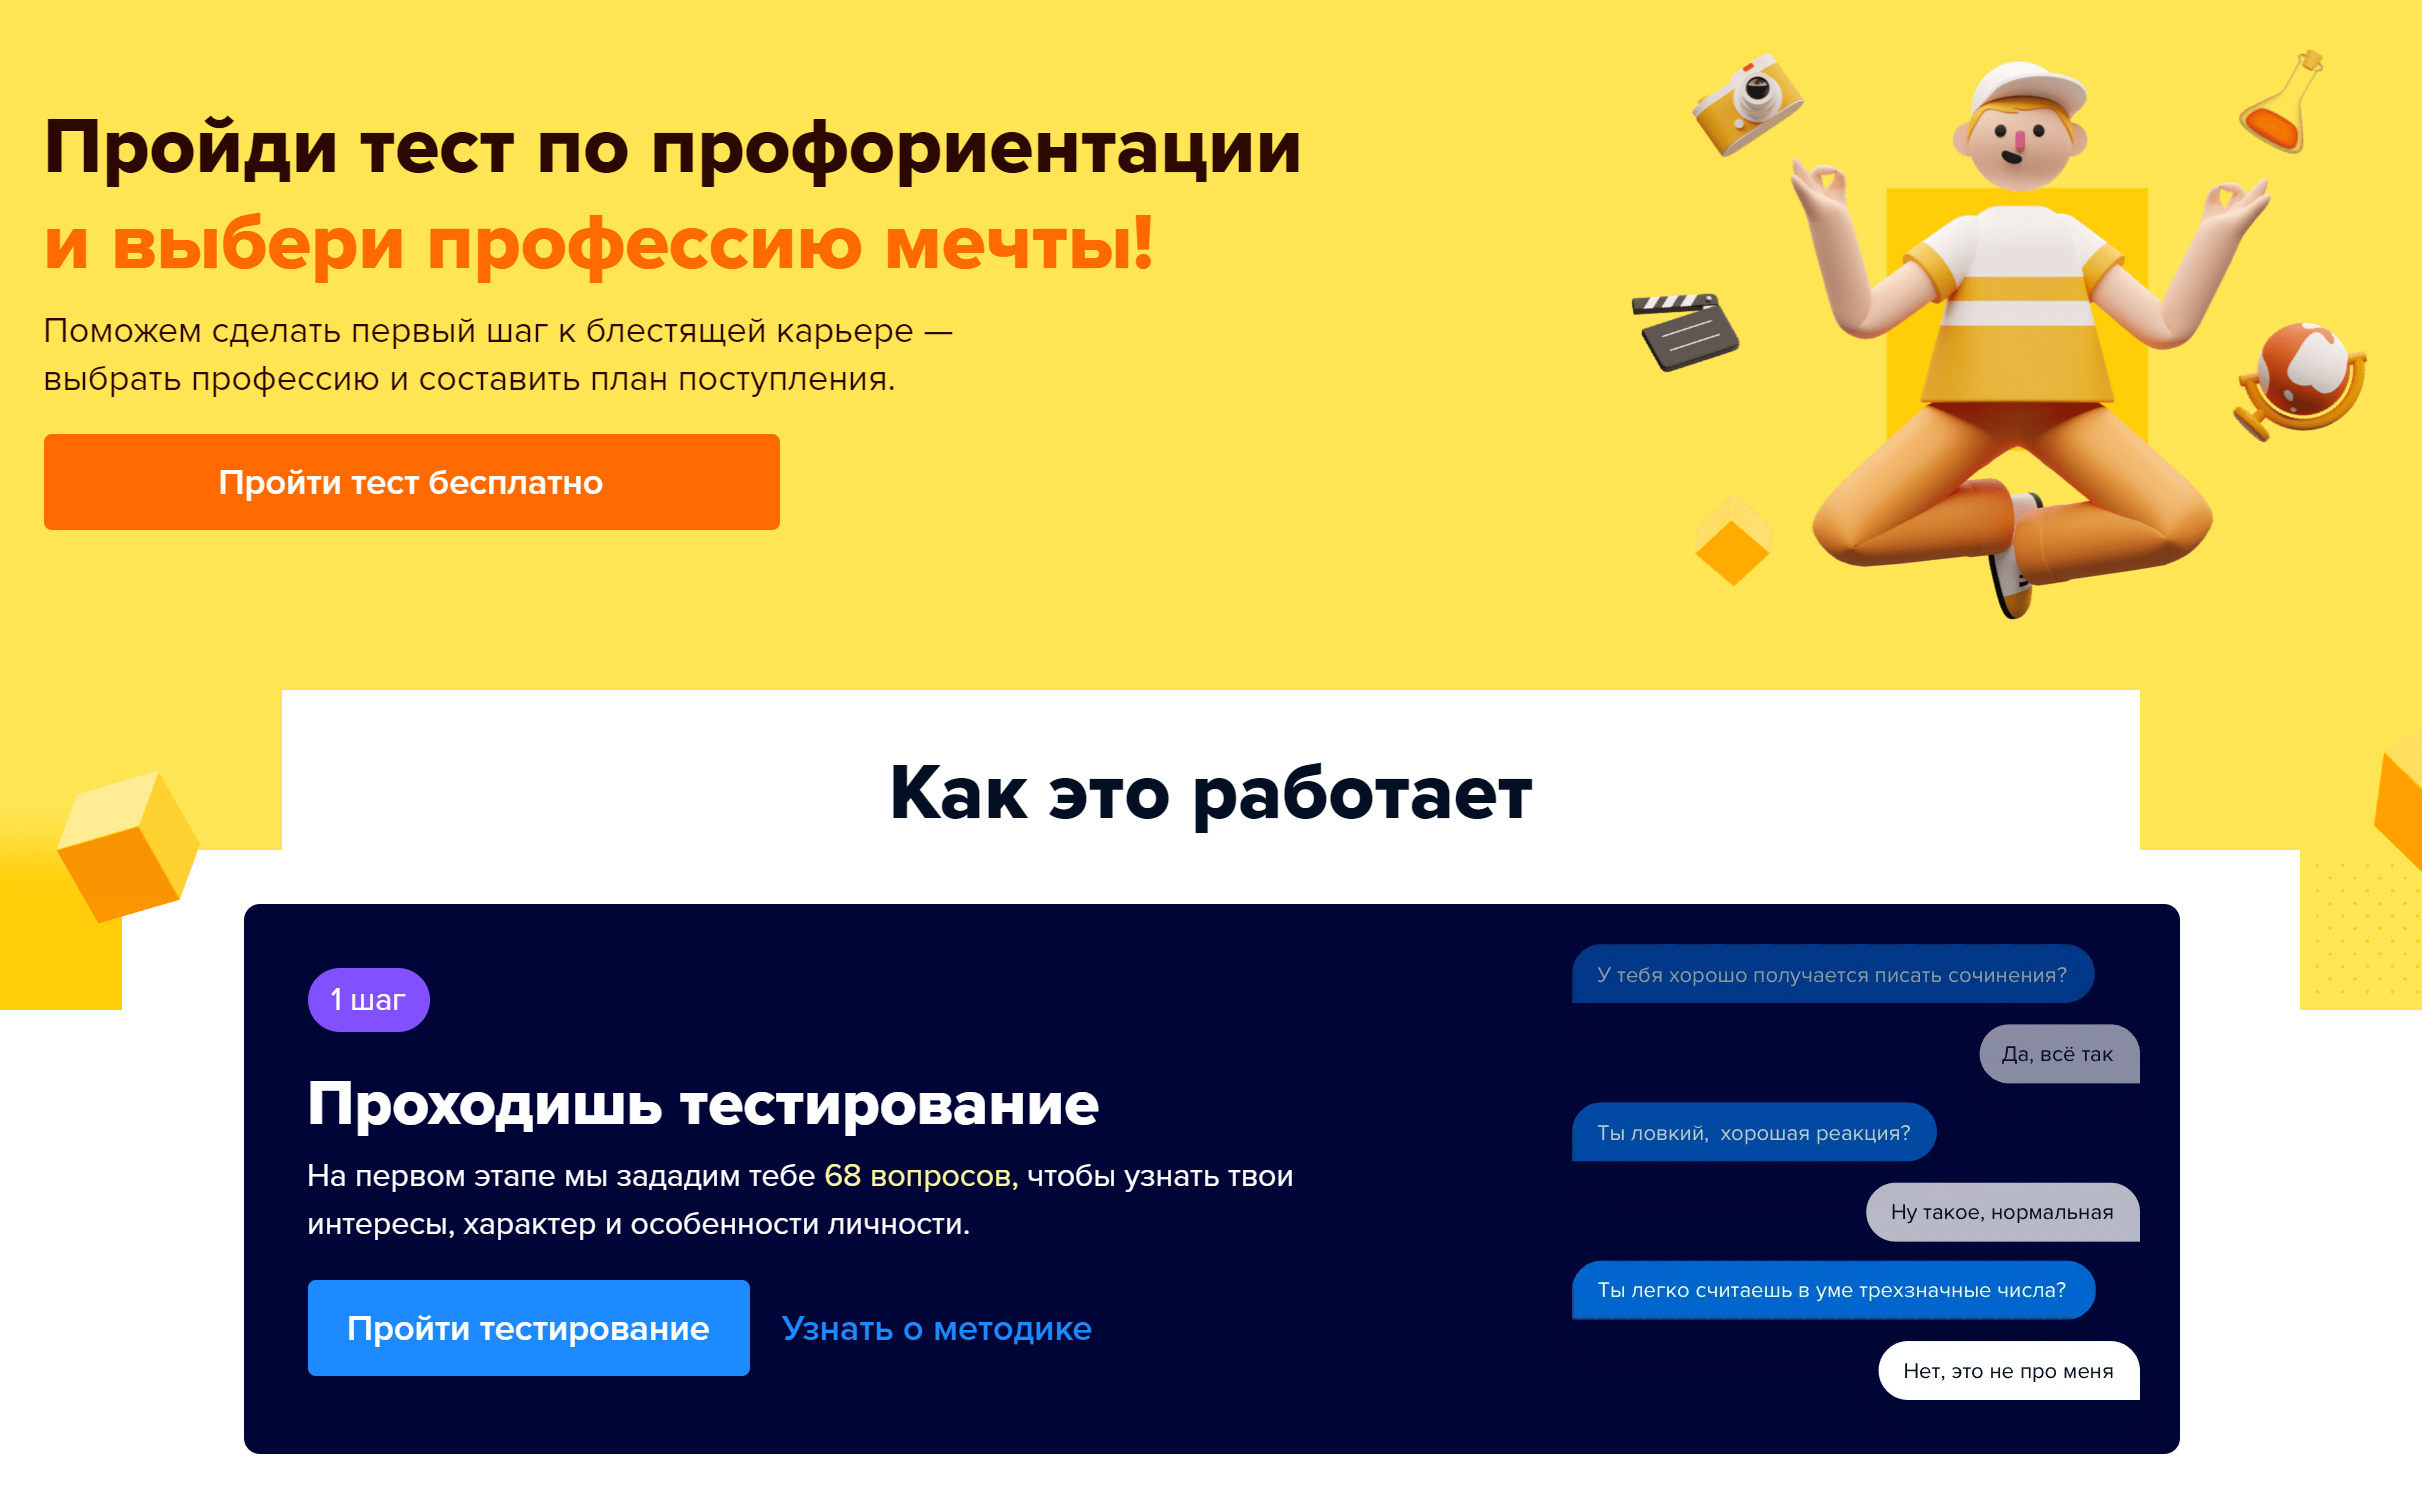 Тест открывается через бот во «Вконтакте» и «Телеграме»